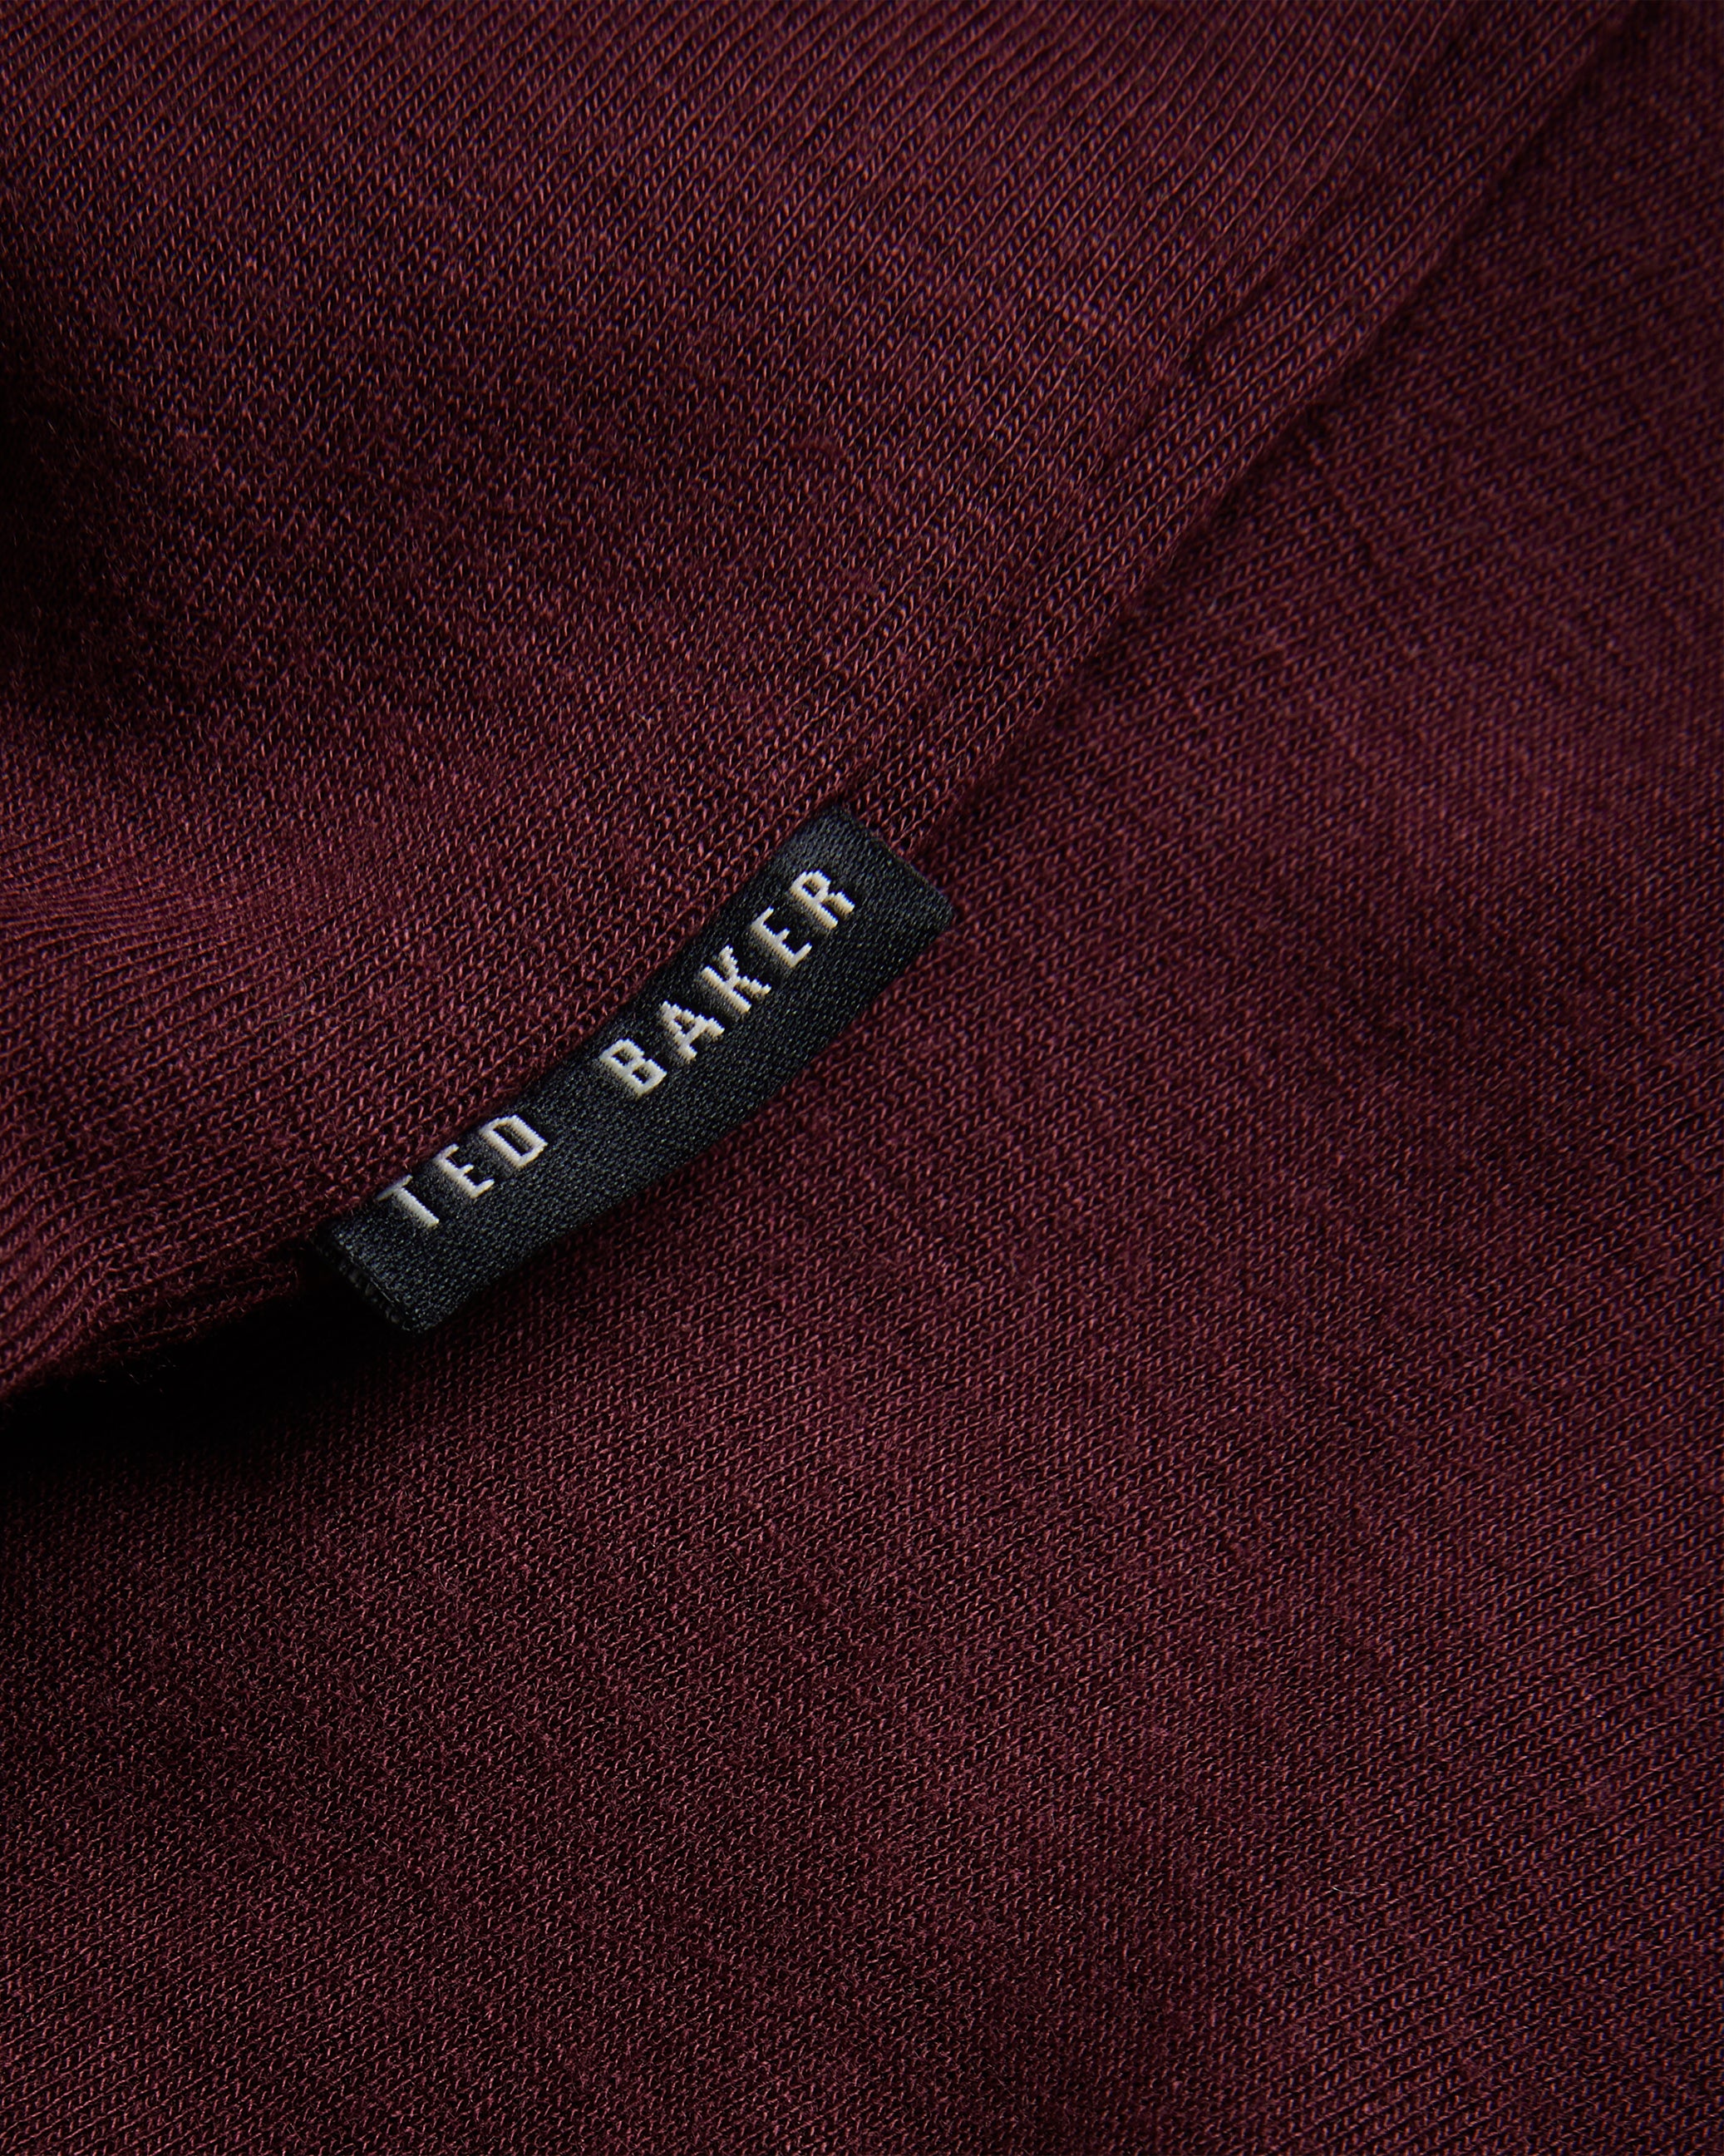 Zylem Long Sleeve Soft Touch Sweatshirt Maroon